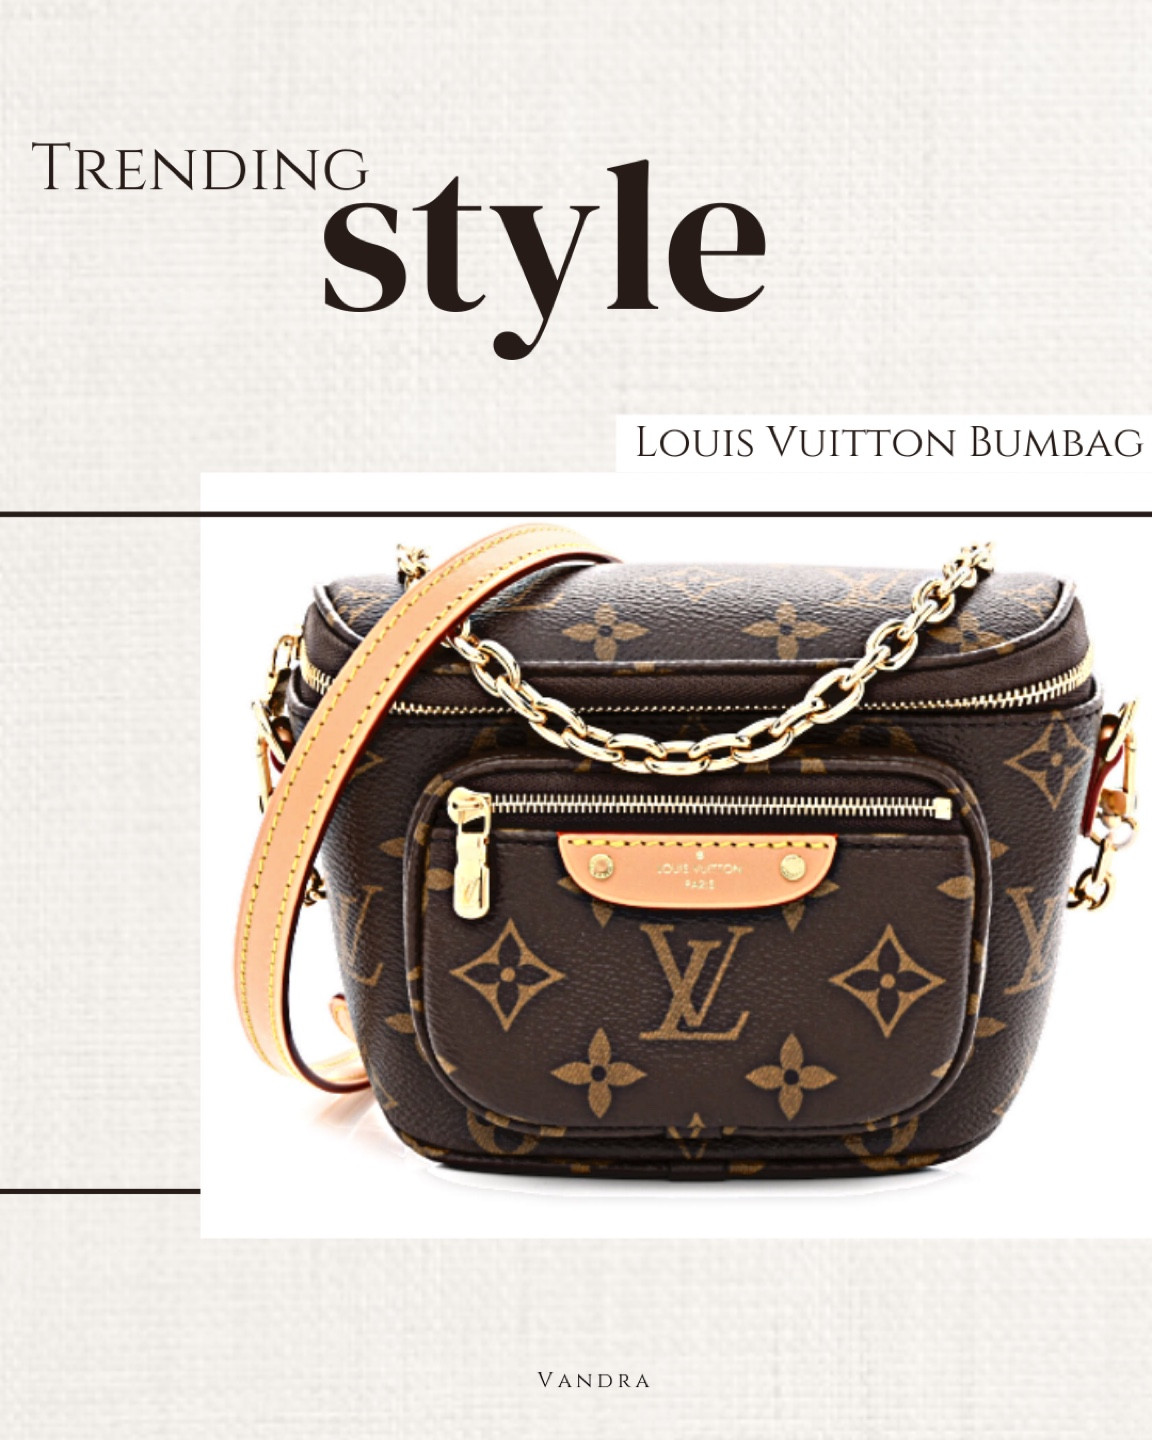 Louis Vuitton Monogram Bumbag curated on LTK